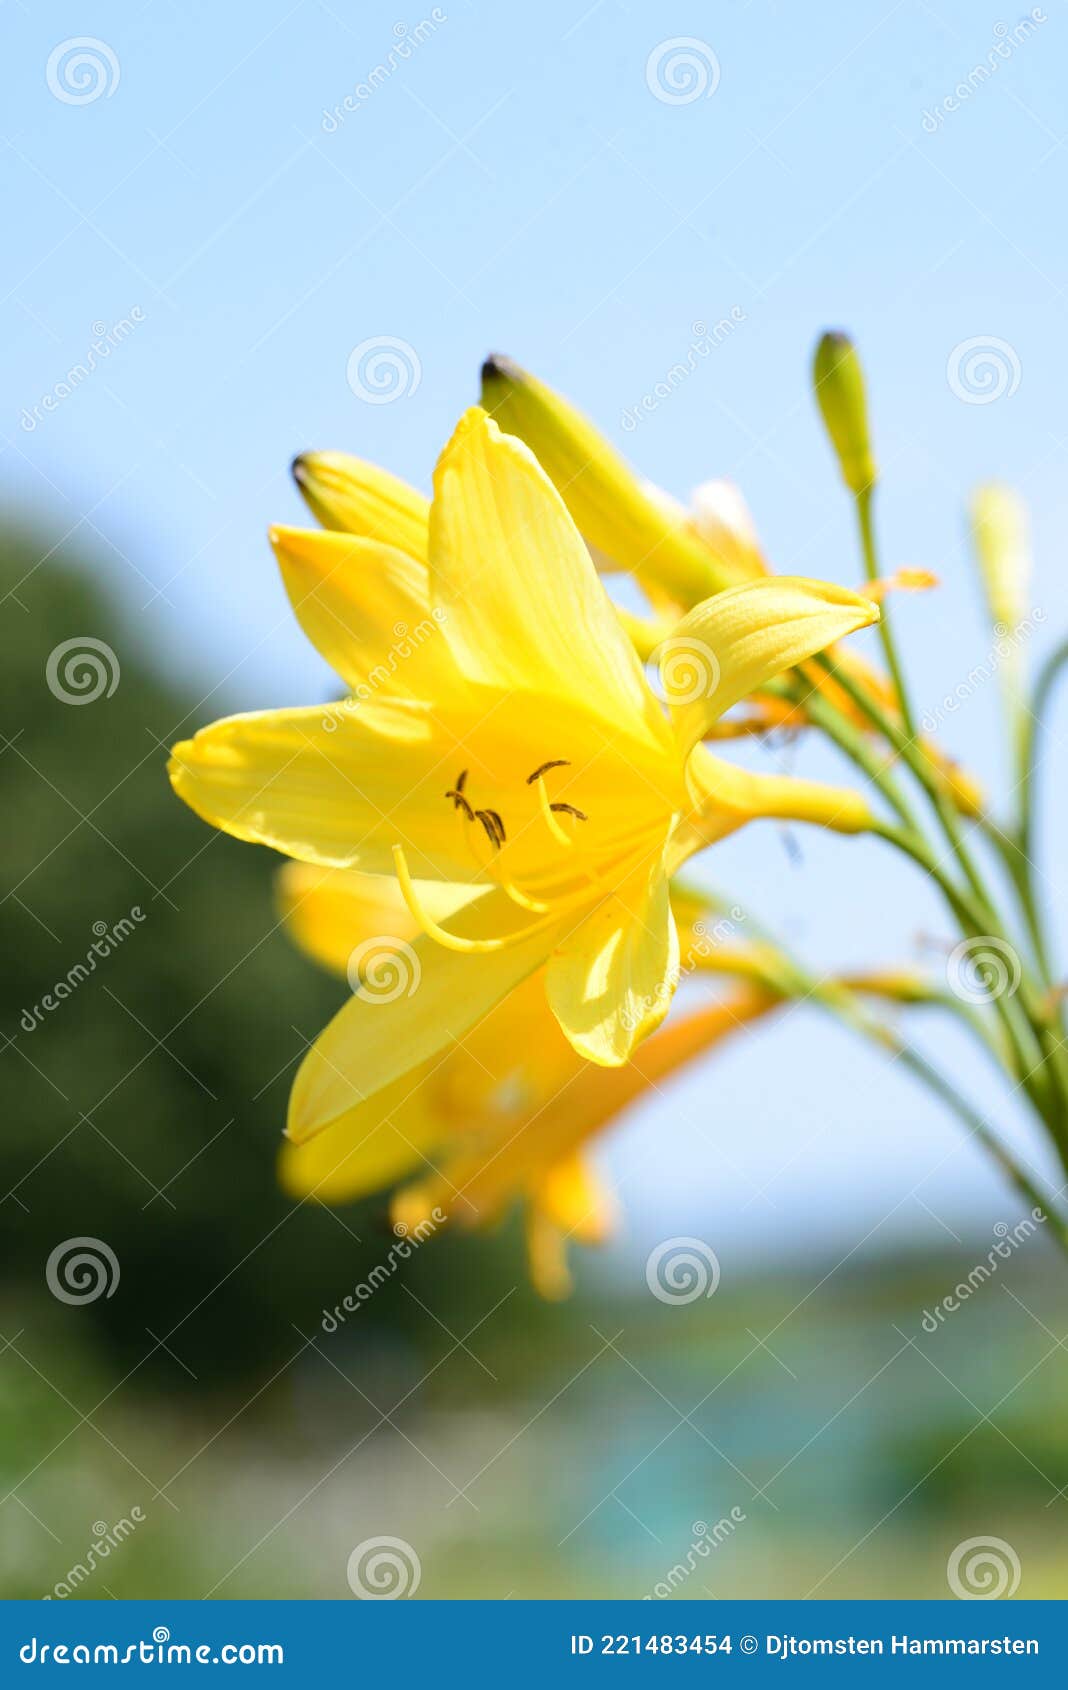 backgrounds of spring garden flowers